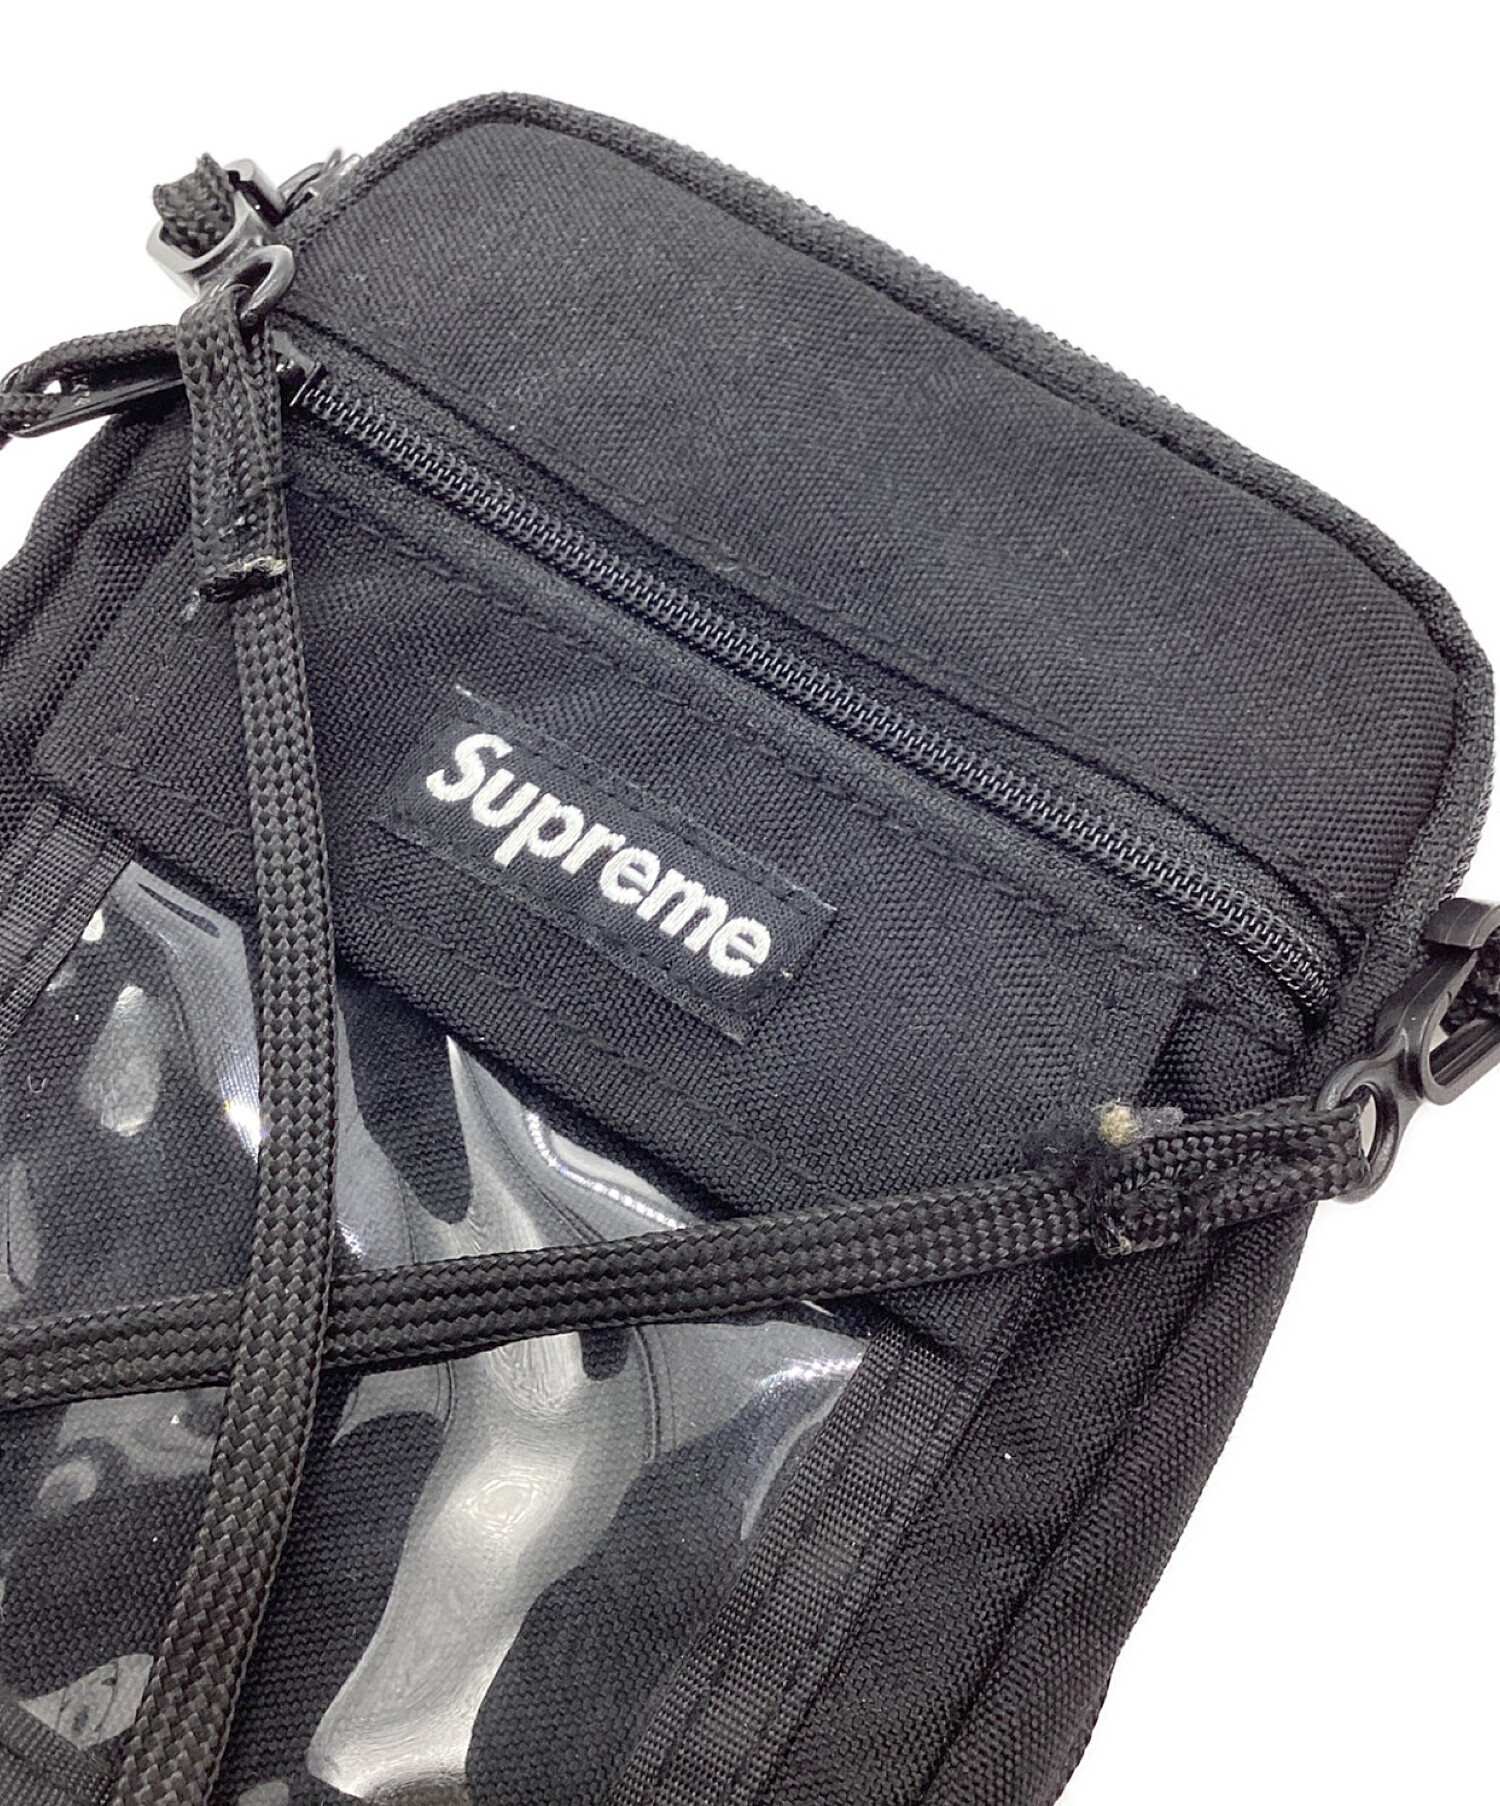 SUPREME (シュプリーム) utility pouch ブラック